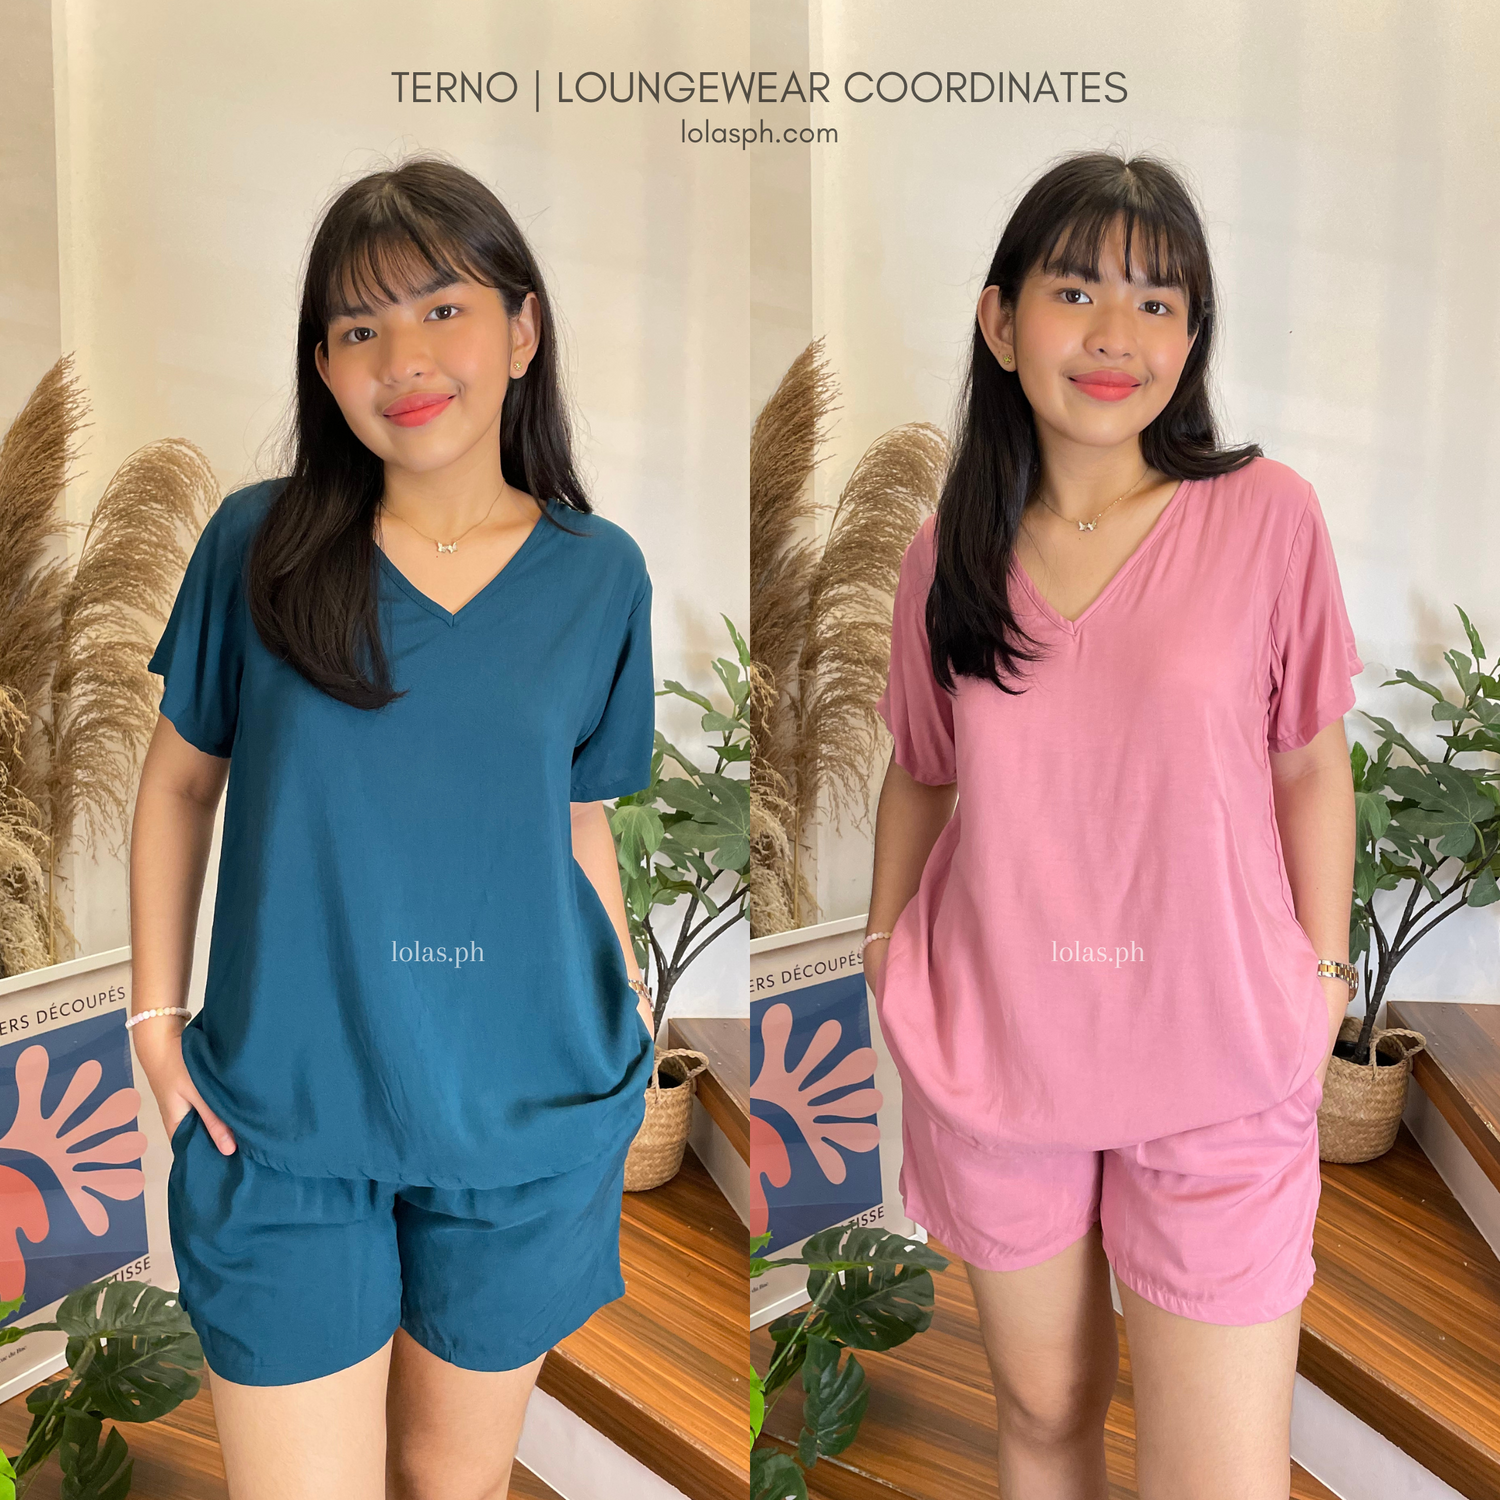 Terno | Loungewear Coordinates